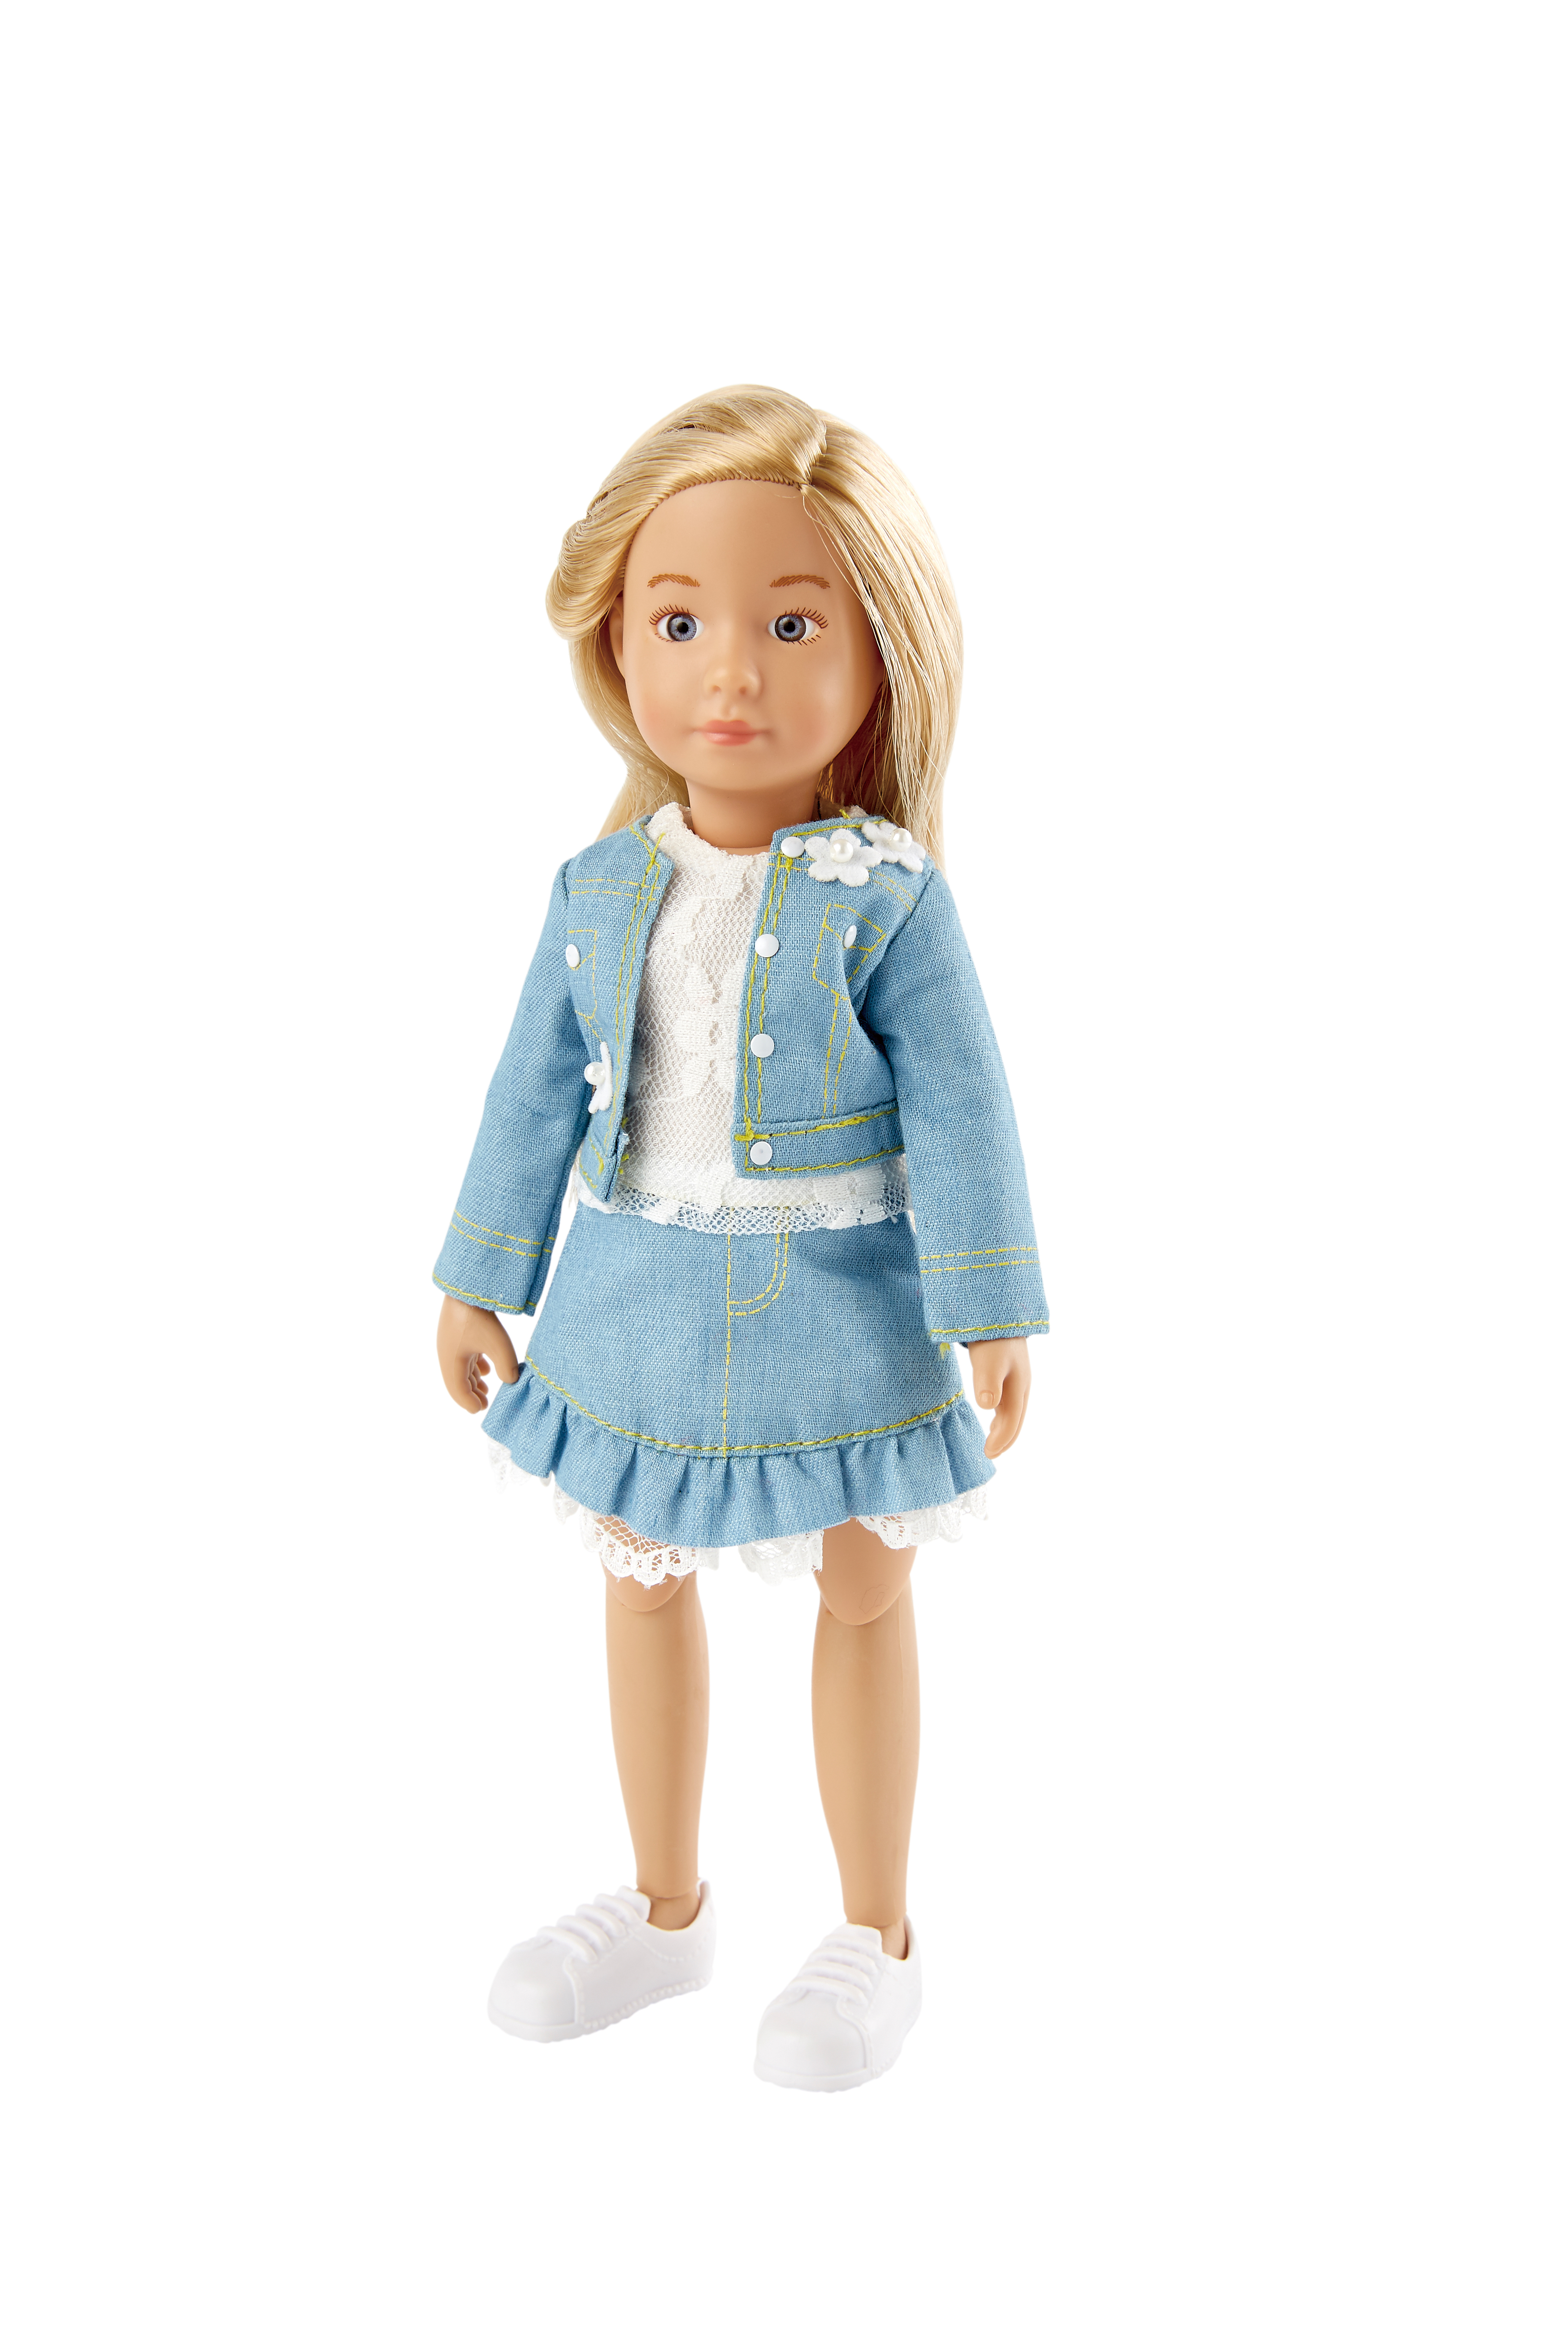 Кукла Вера Kruselings в весеннем нарядном костюме, 23 см, арт. 0126871